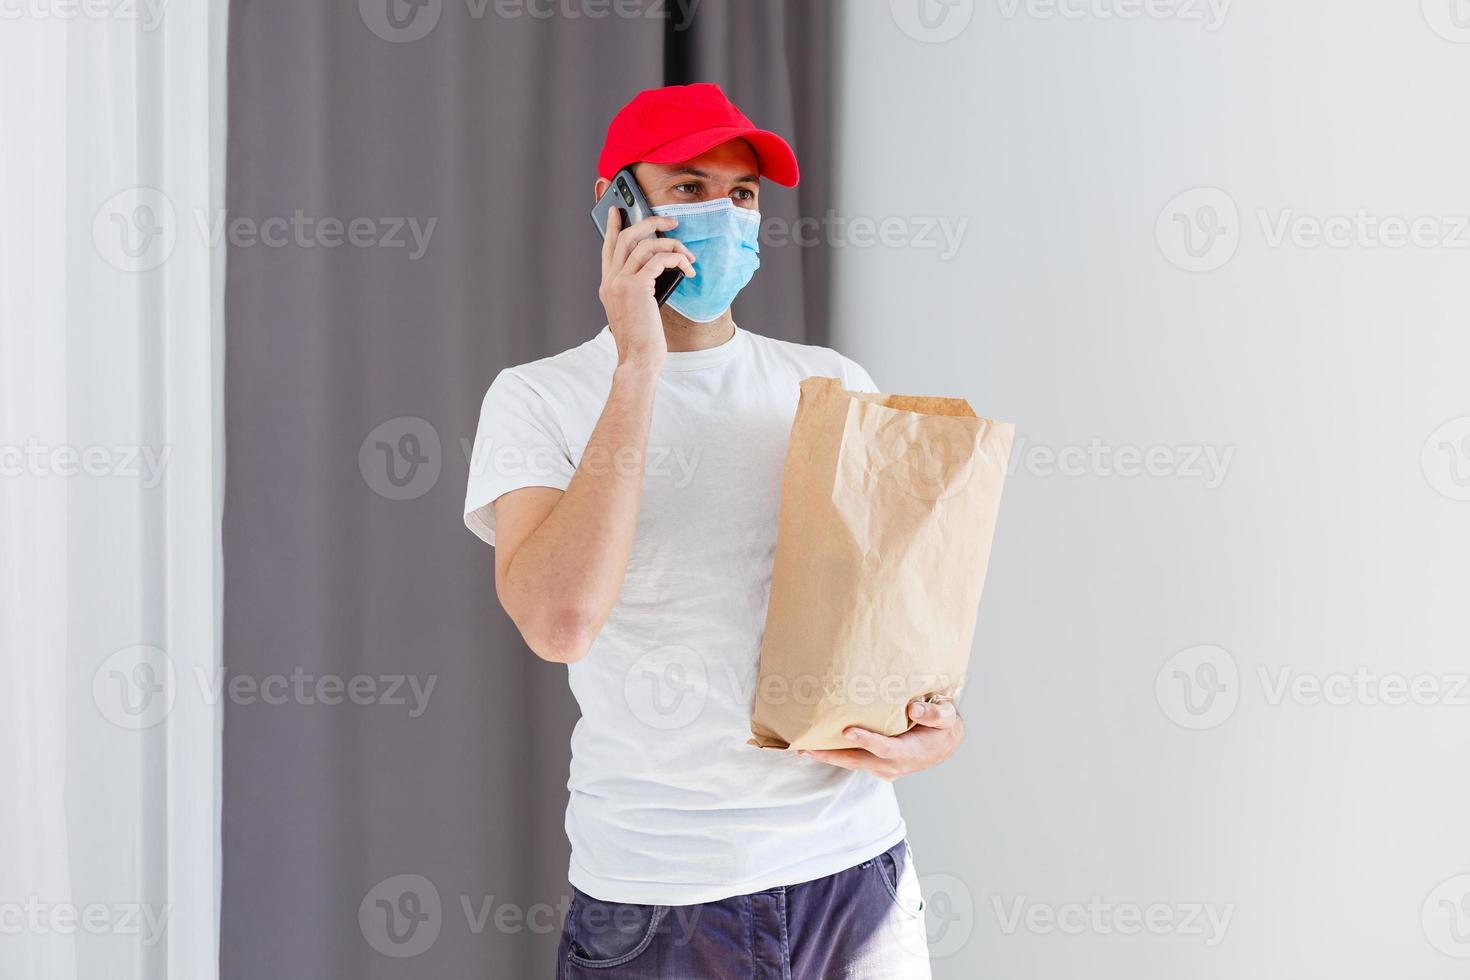 levering Mens Holding papier zak met voedsel Aan wit achtergrond, voedsel levering Mens in beschermend masker foto